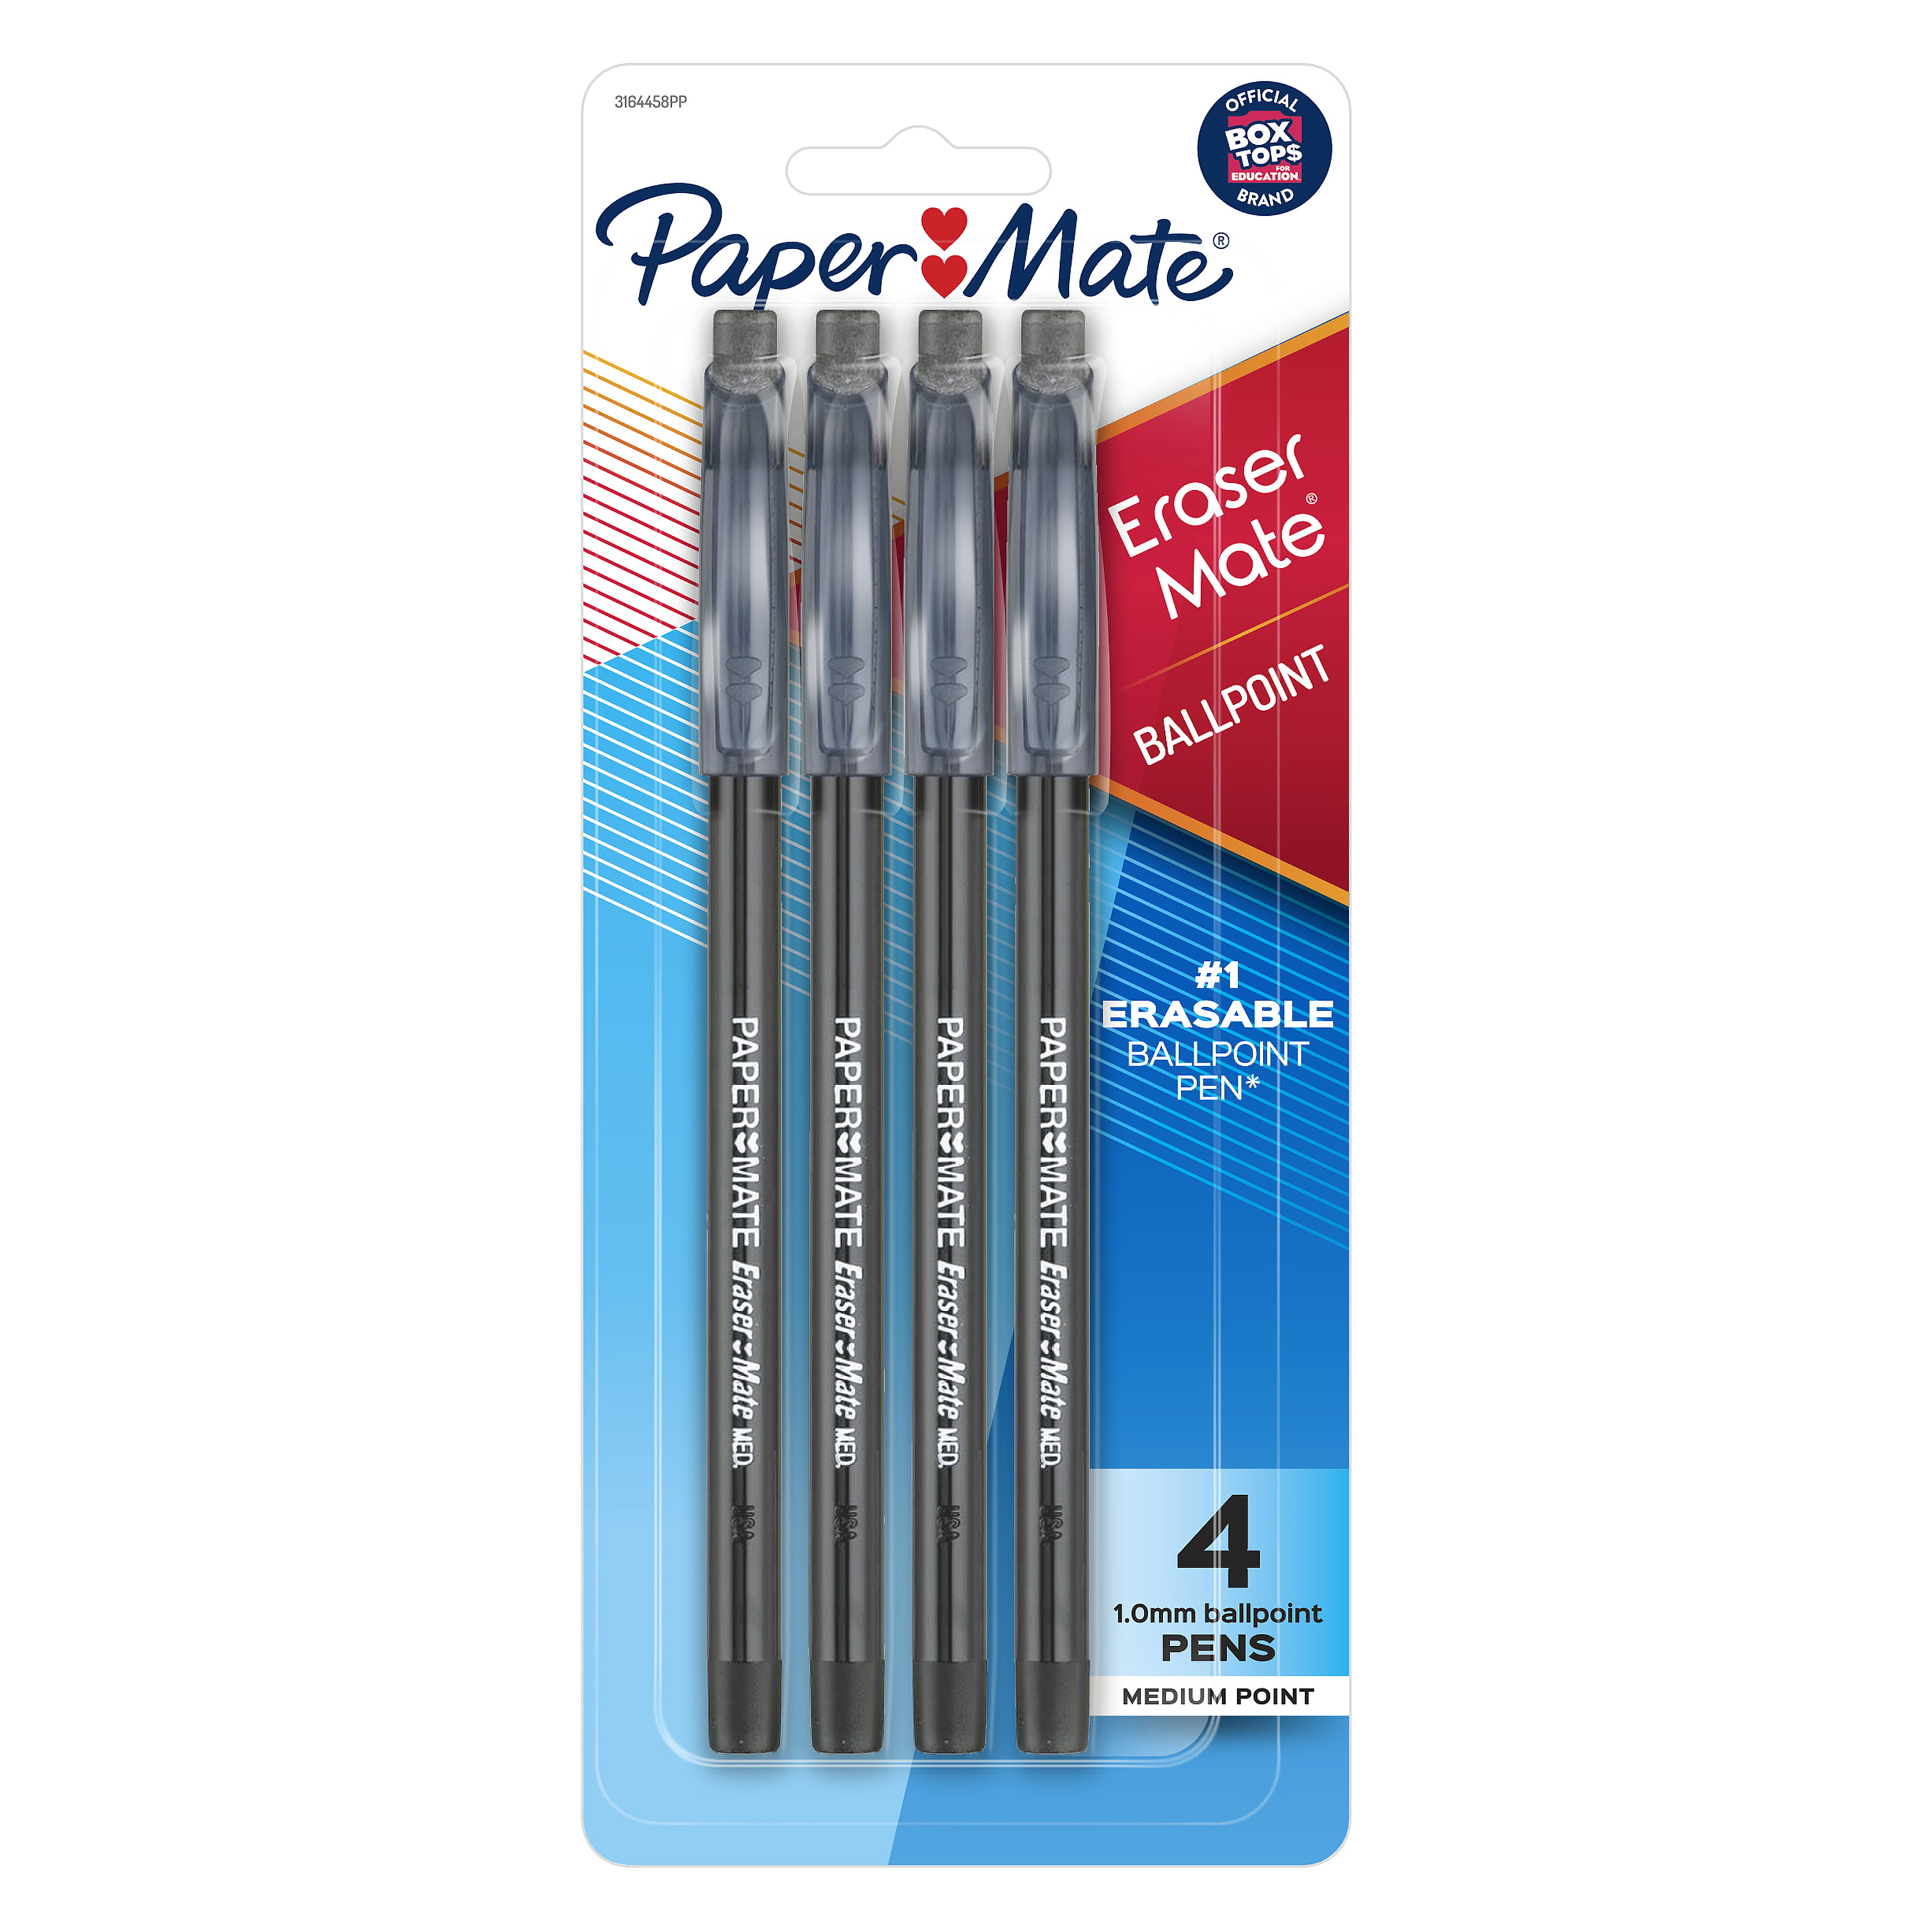 Papermate Erasermate Medium Point 1.0 mm Black Erasable Ballpoint Pens 6 Pack 